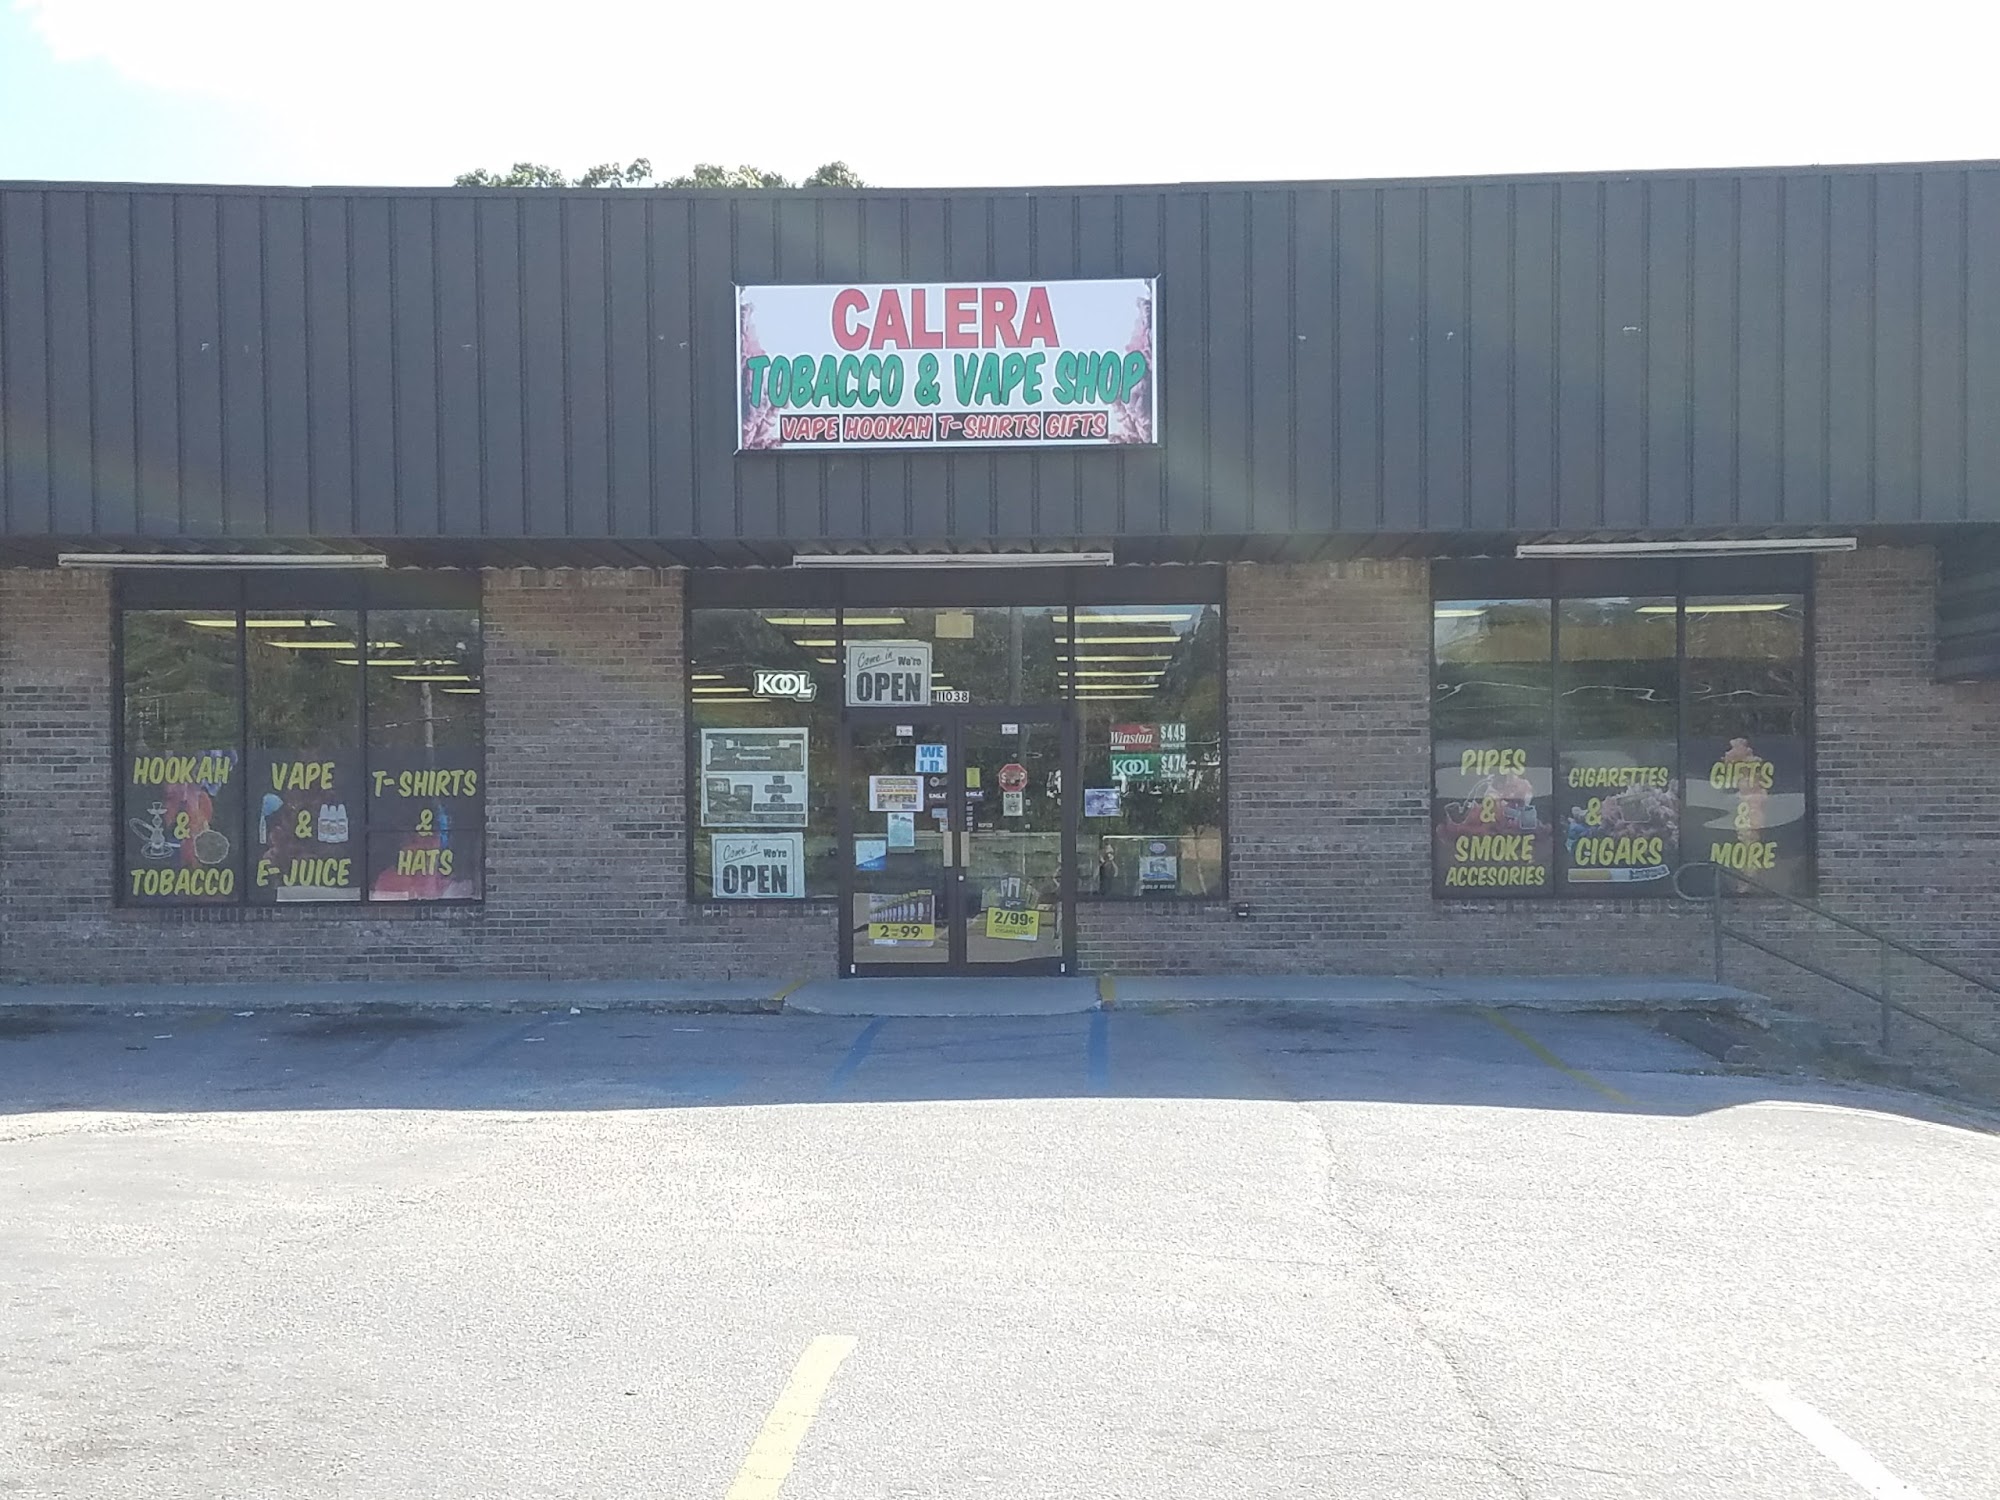 Calera vape and Tobacco Shop